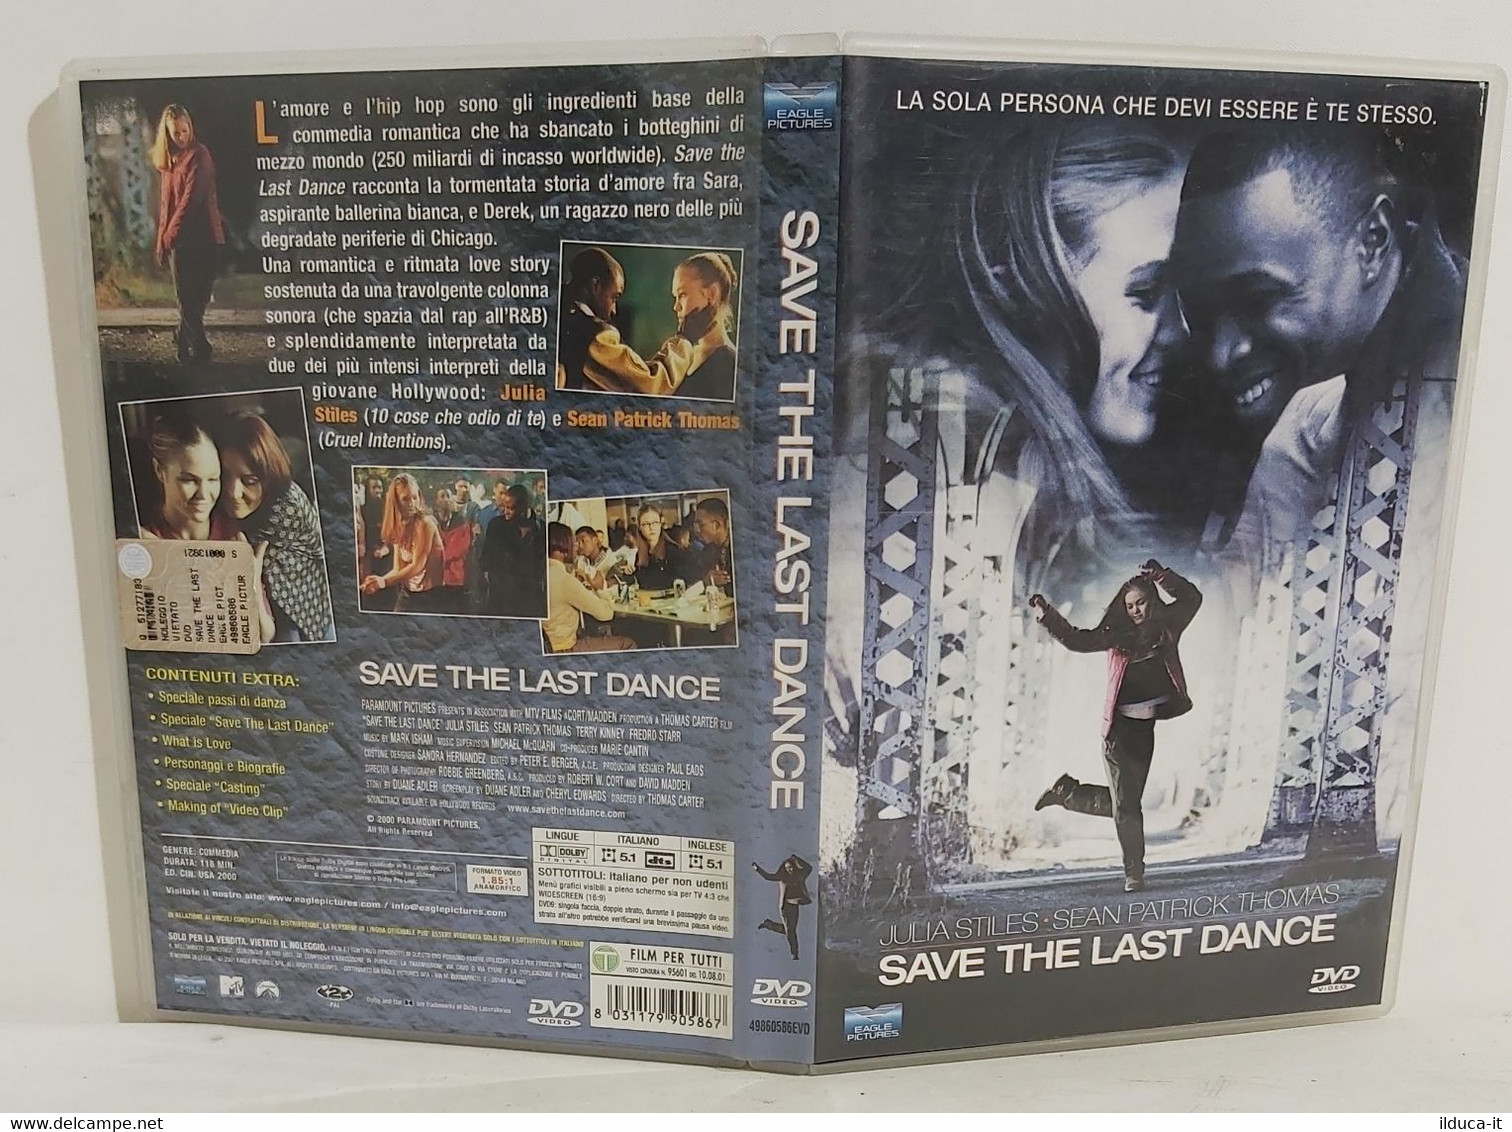 I101492 DVD - Save The Last Dance - Julia Stiles Sean Patrick Thomas - Romantique